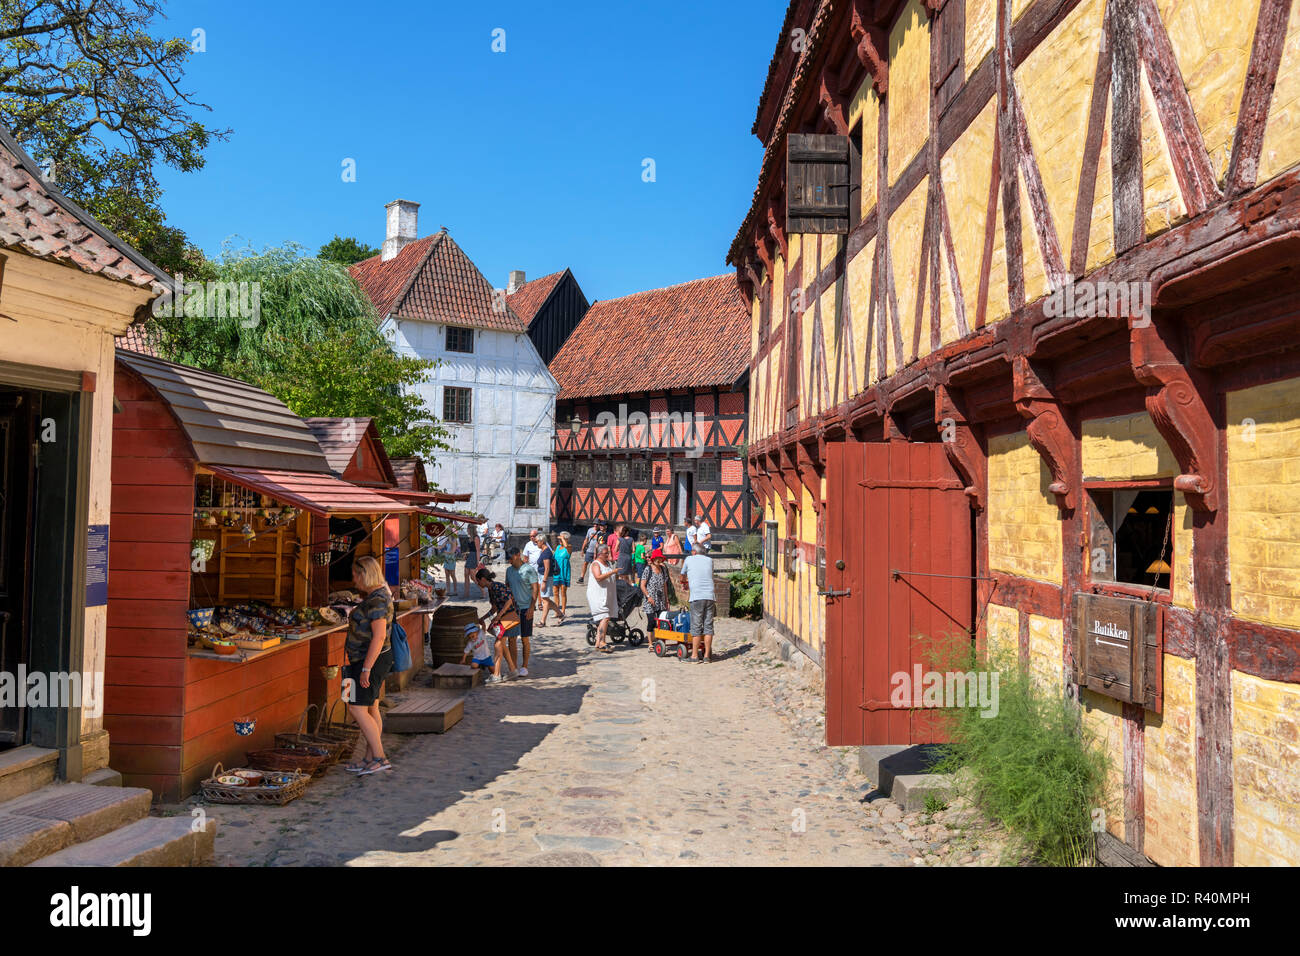 Algade street in The Old Town (Den Gamle By), an open air museum in Aarhus, Denmark Stock Photo